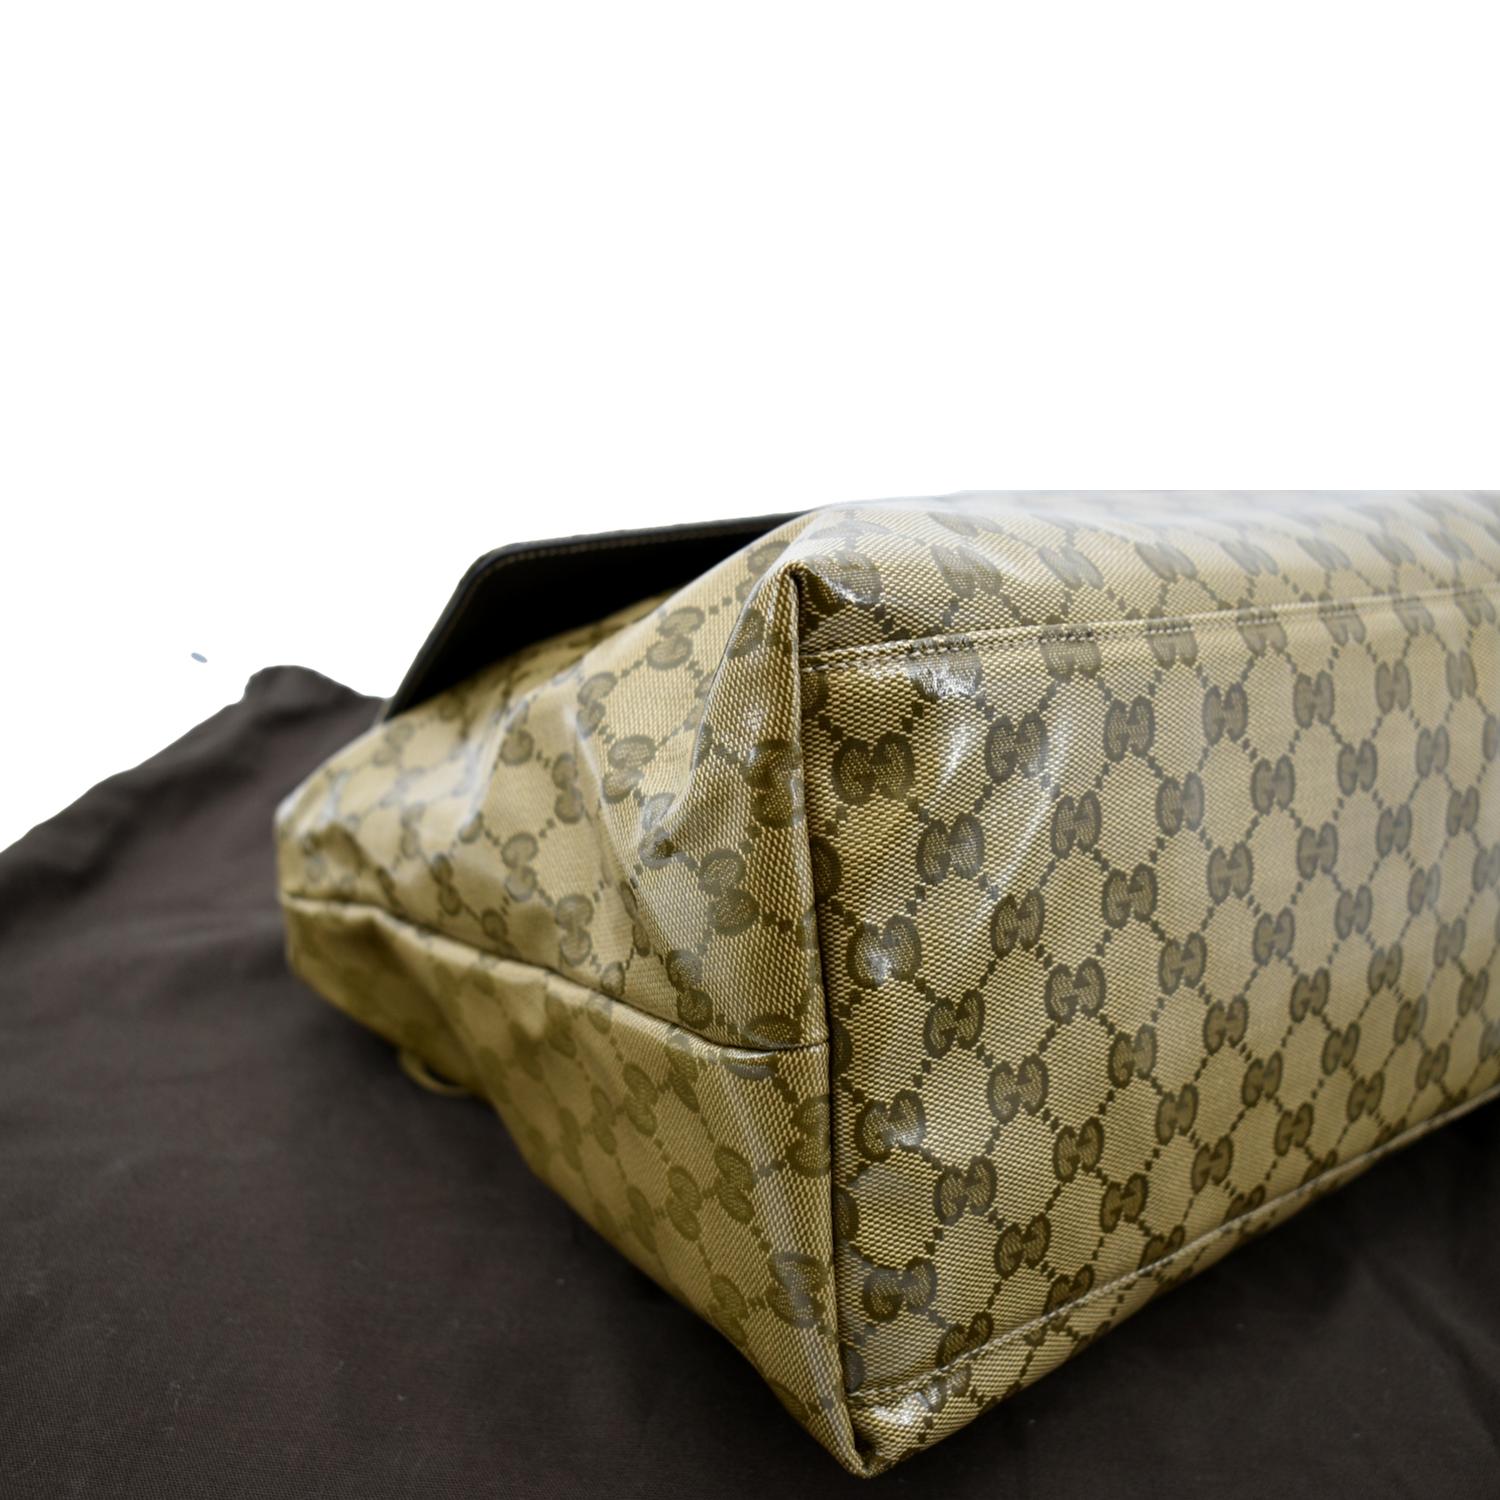 GG Crystal Medium Tote Bag in Black - Gucci